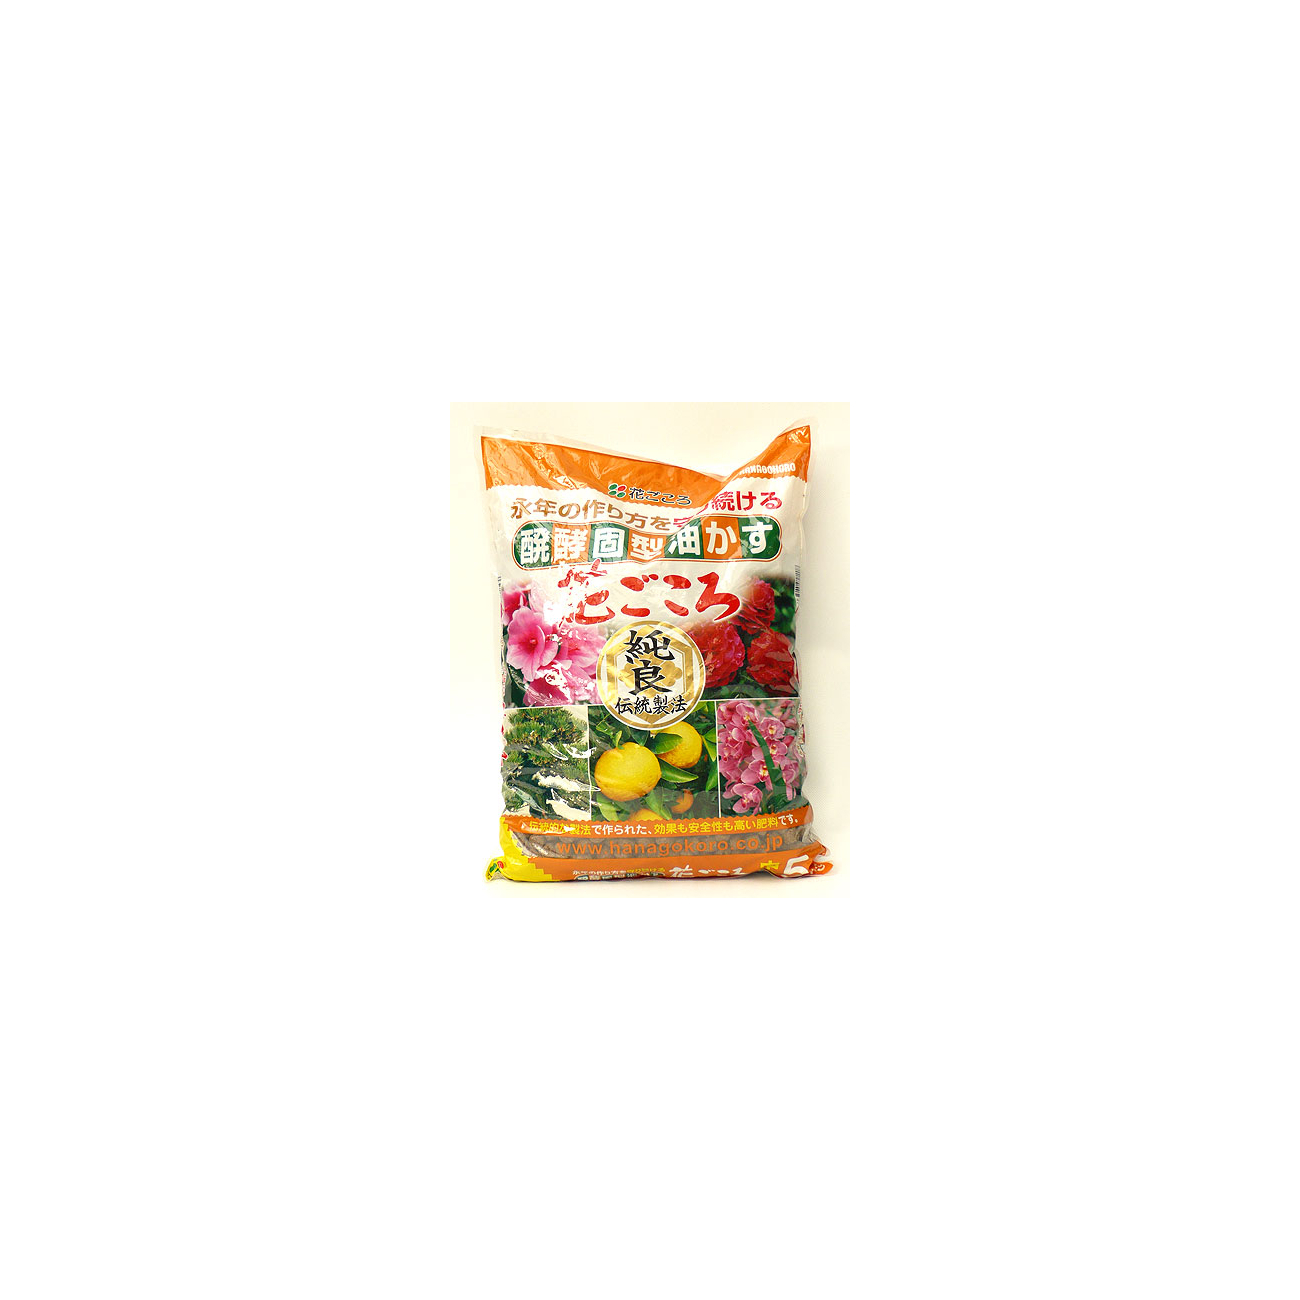 Hanagokoro organic Japanese fertilizer small grain size 3 Kg